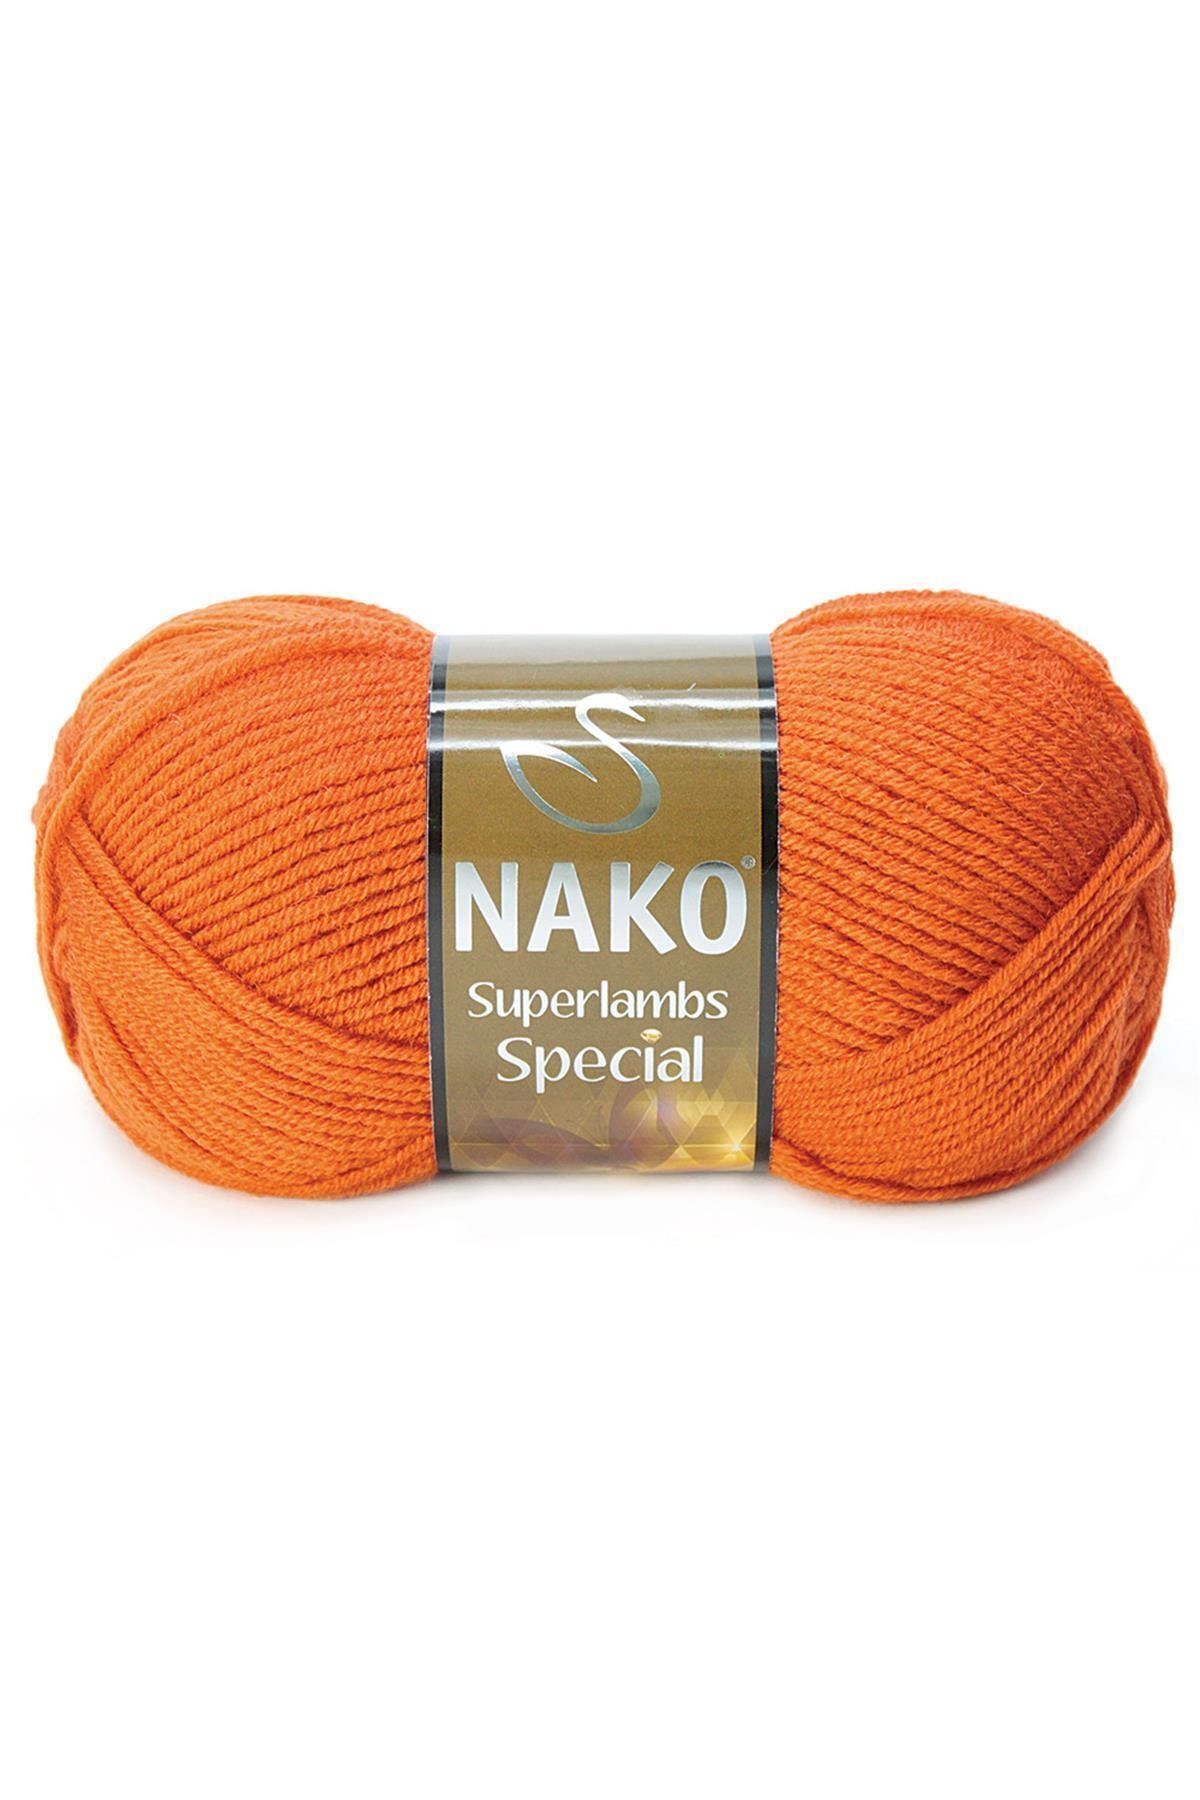 Nako Superlambs Special 4888 Portakal